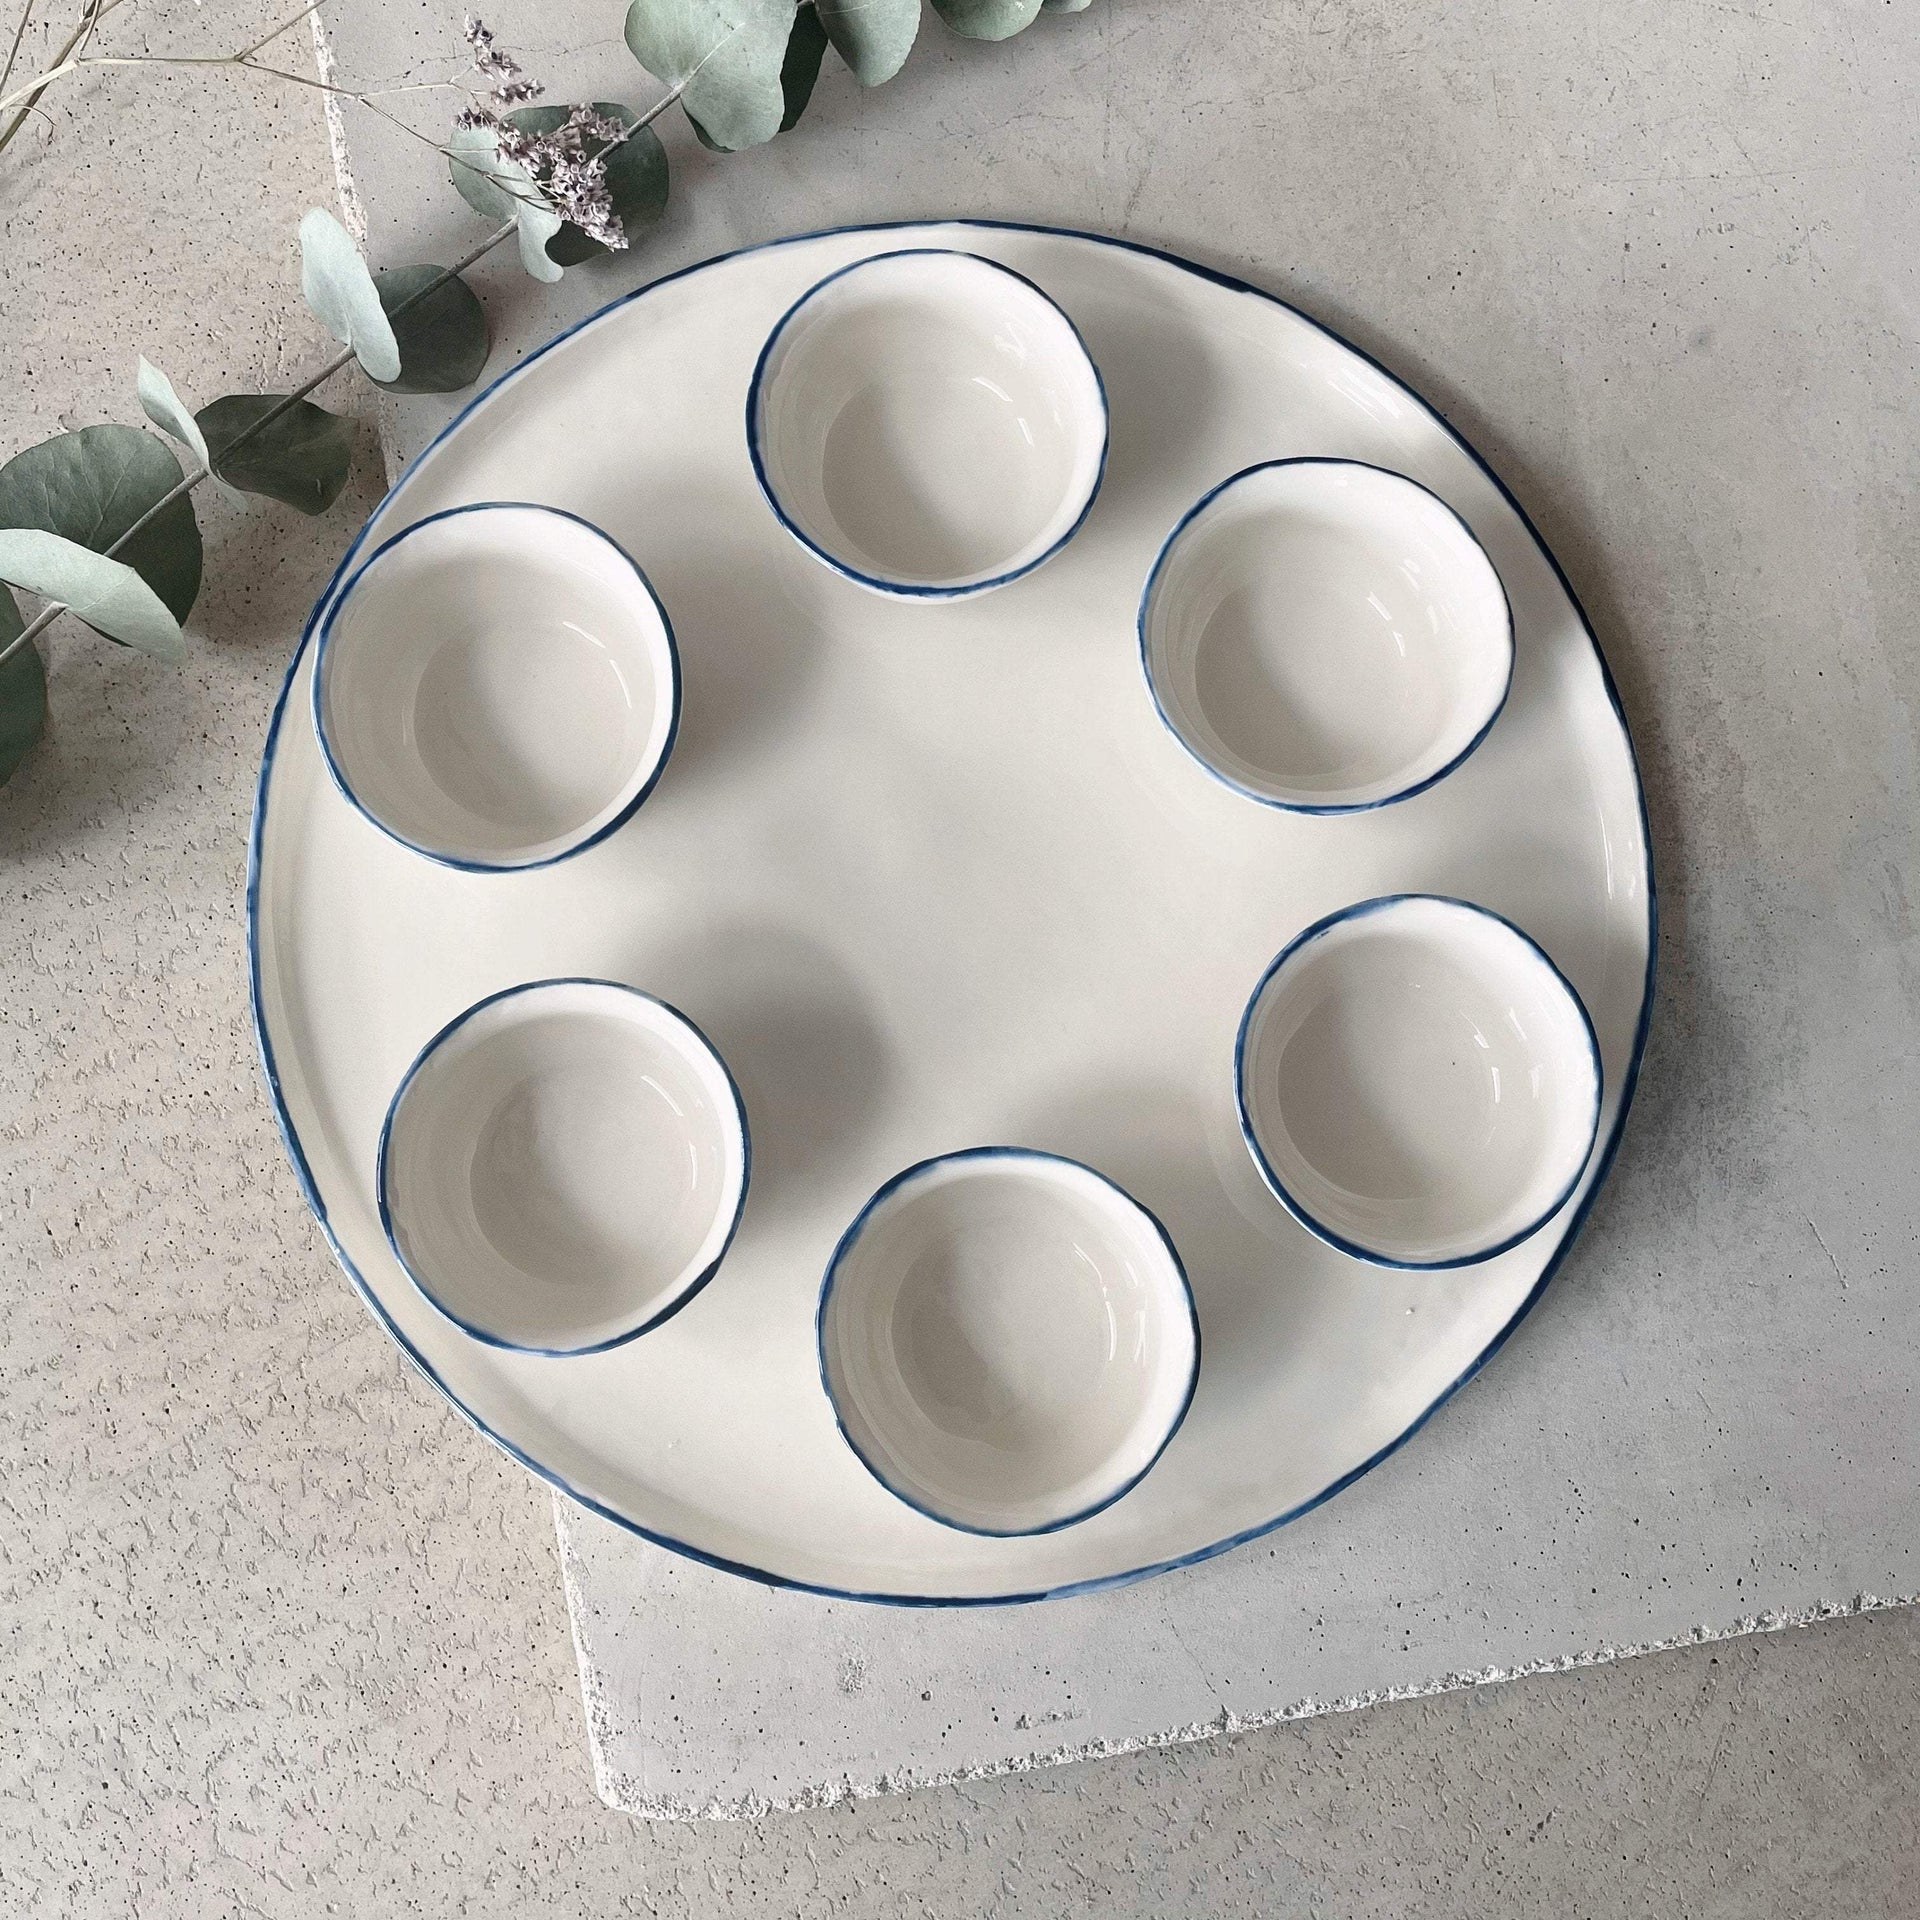 SIND Studio Seder Plates White with Blue Trim Porcelain Seder Plate by SIND Studio